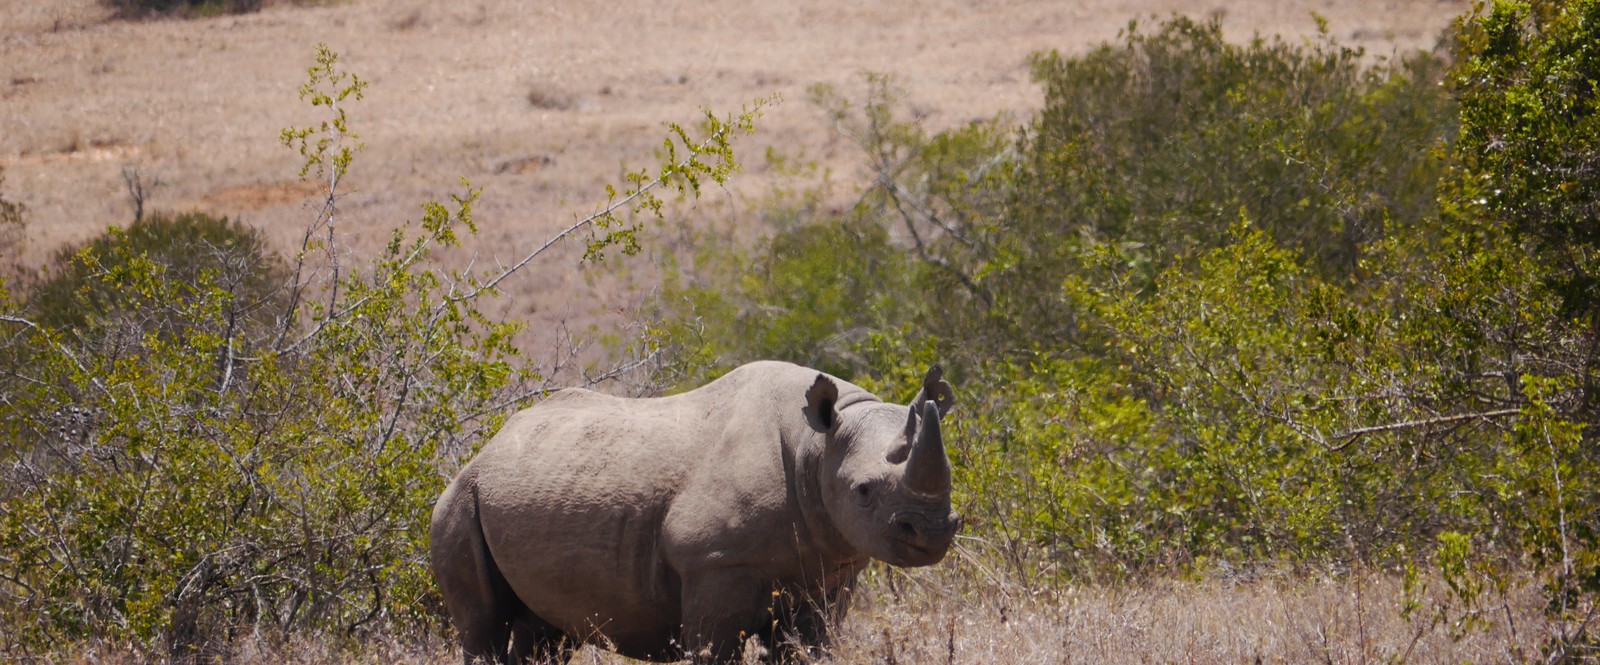 A rhino in the Borana Conservancy, Kenya.